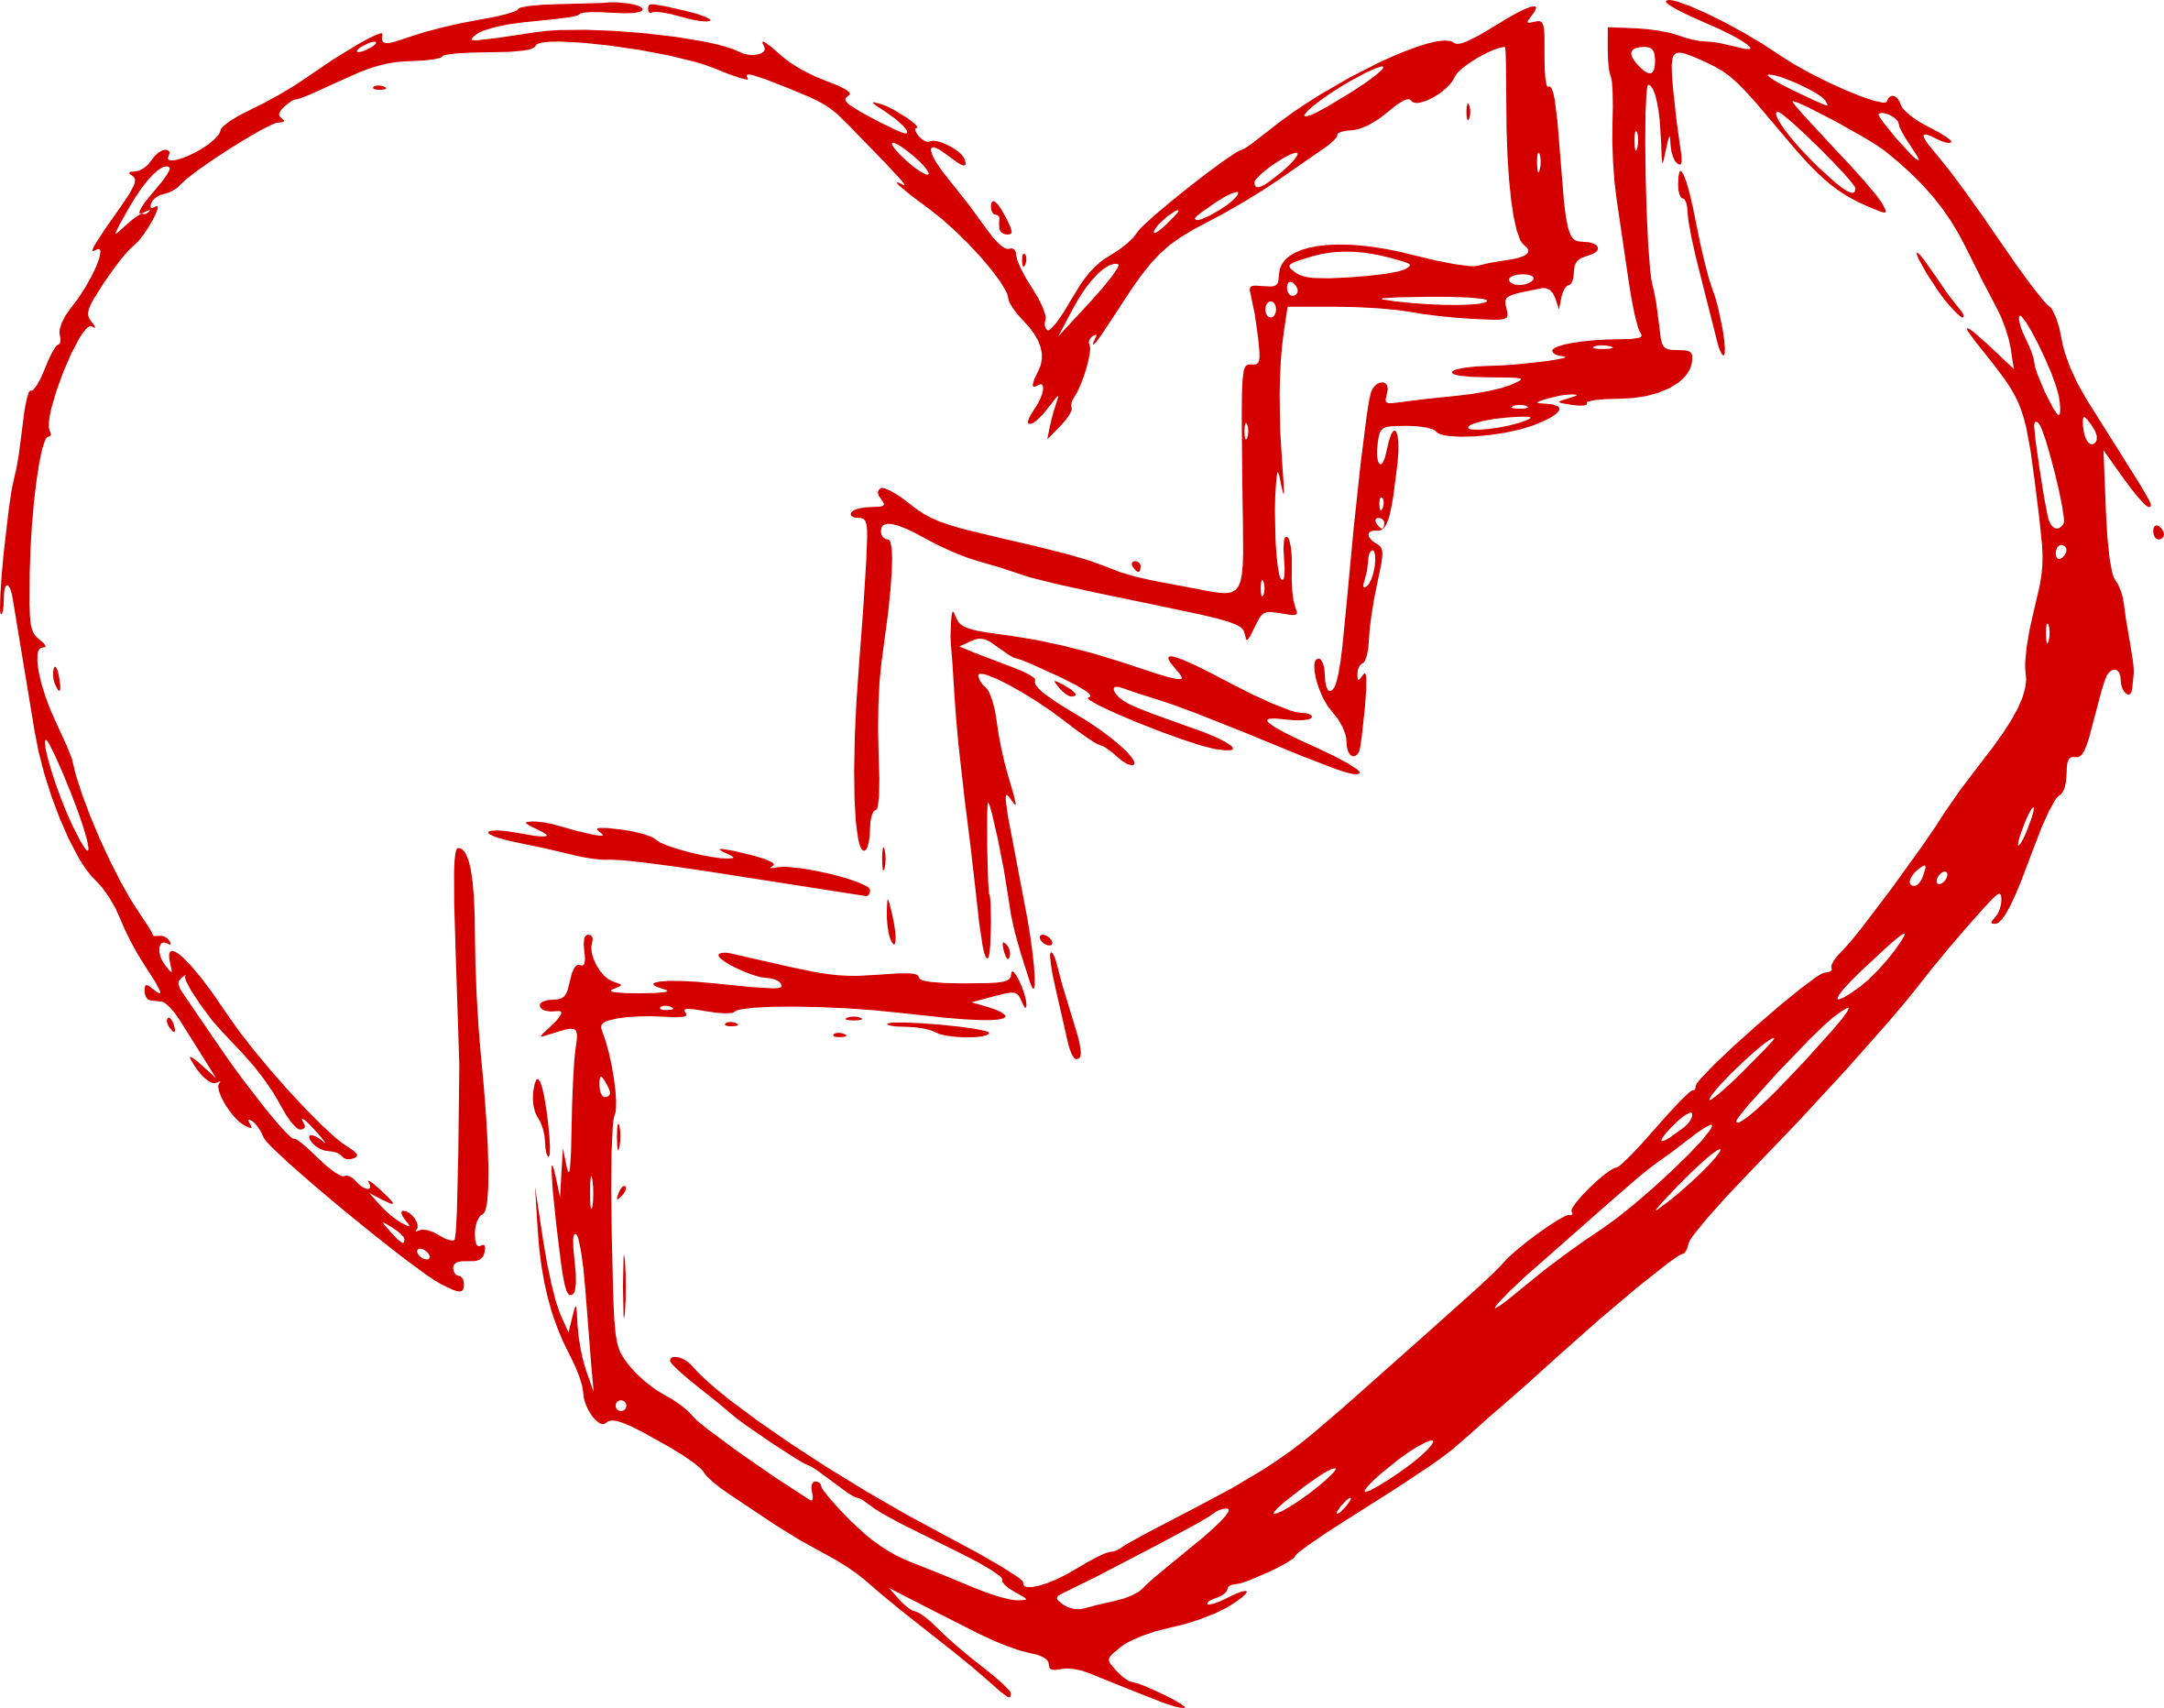 Broken Heart PNG Free Download SVG Clip arts